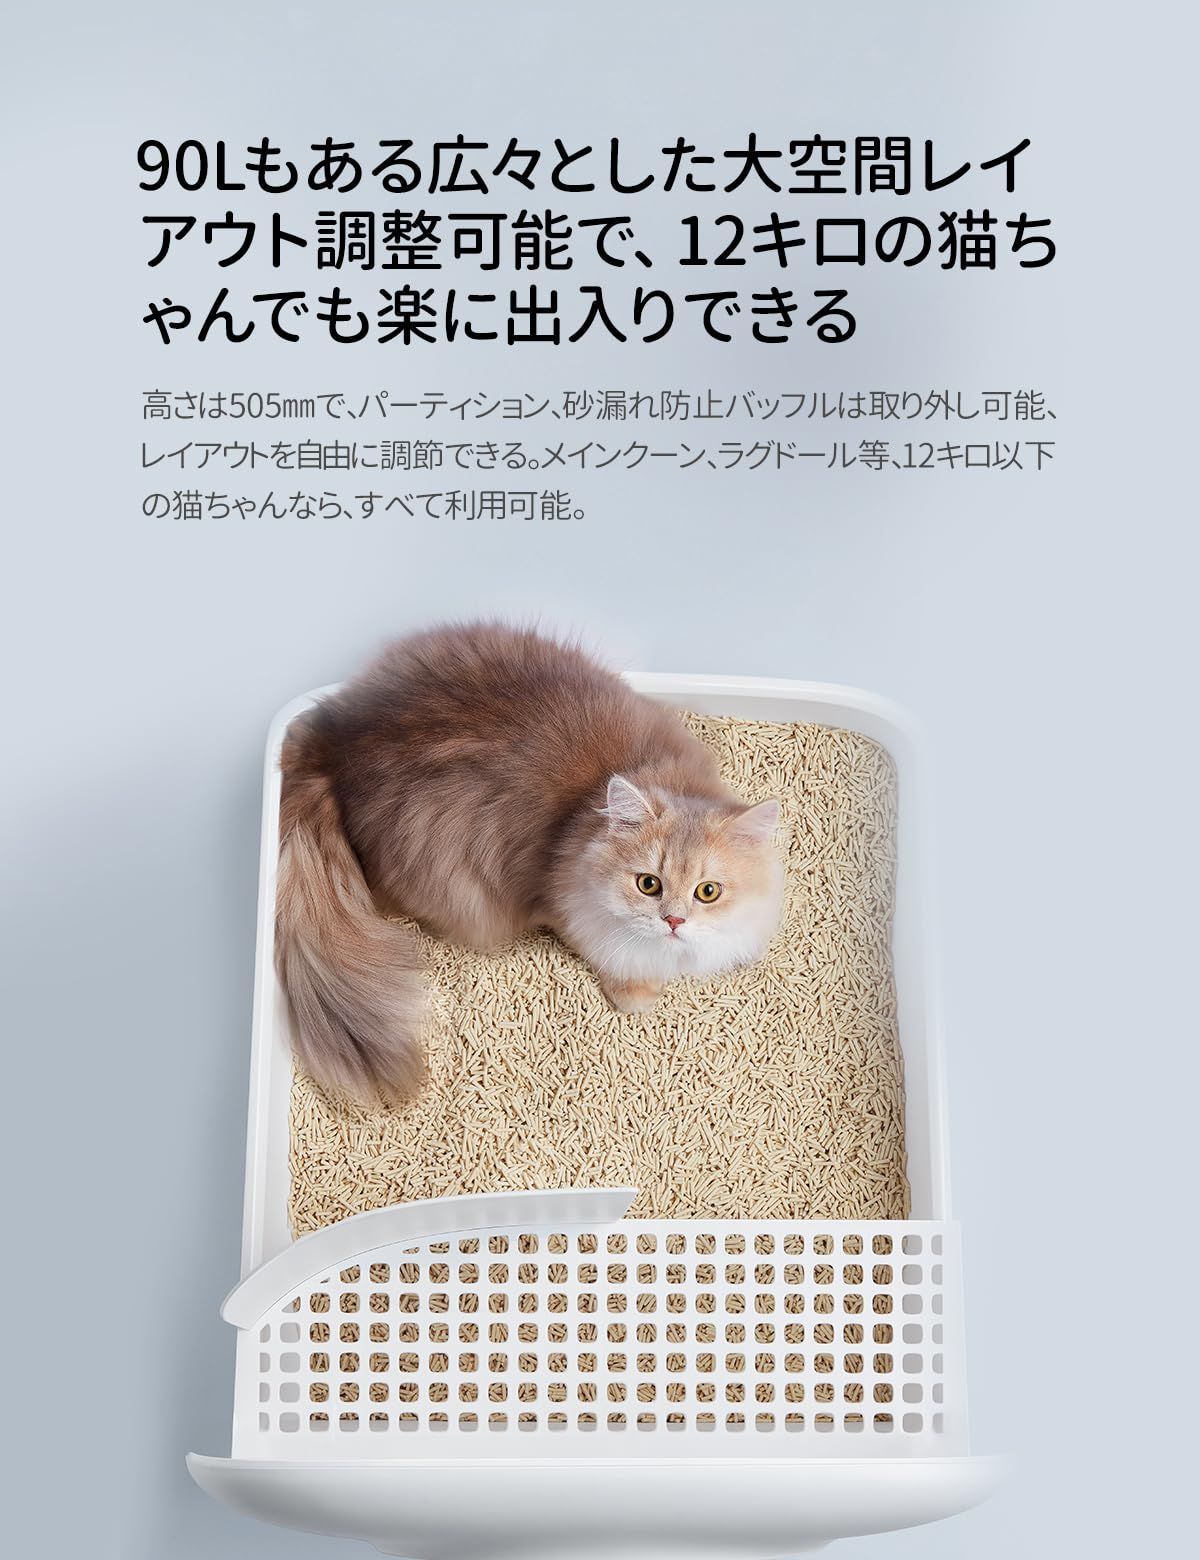 HoHoHi 猫トイレ 自動消臭 排気ファン付き スマート UVC 除菌 大型